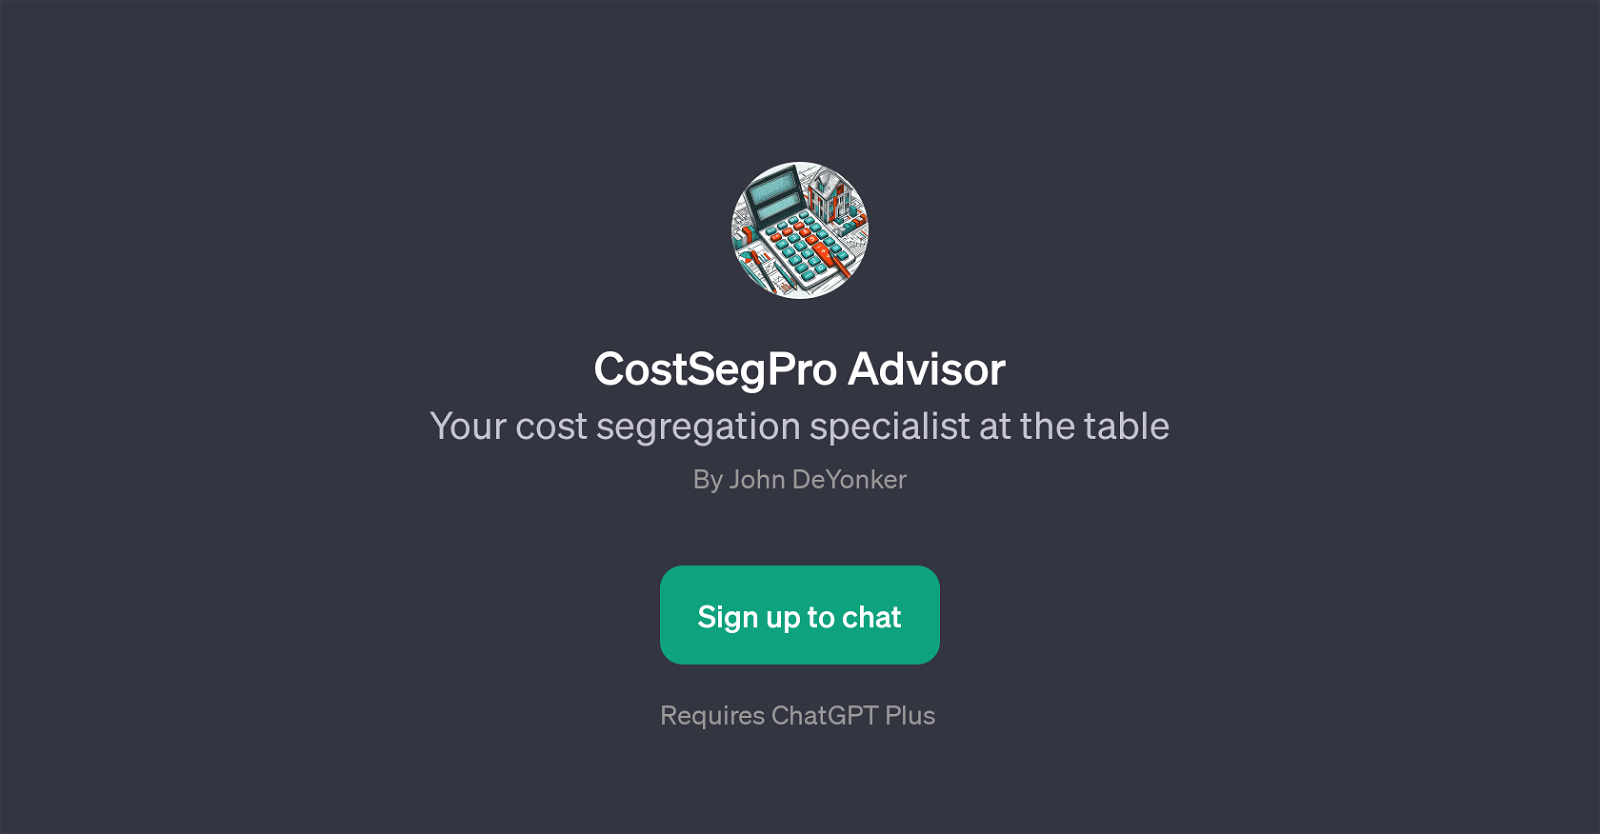 CostSegPro Advisor website